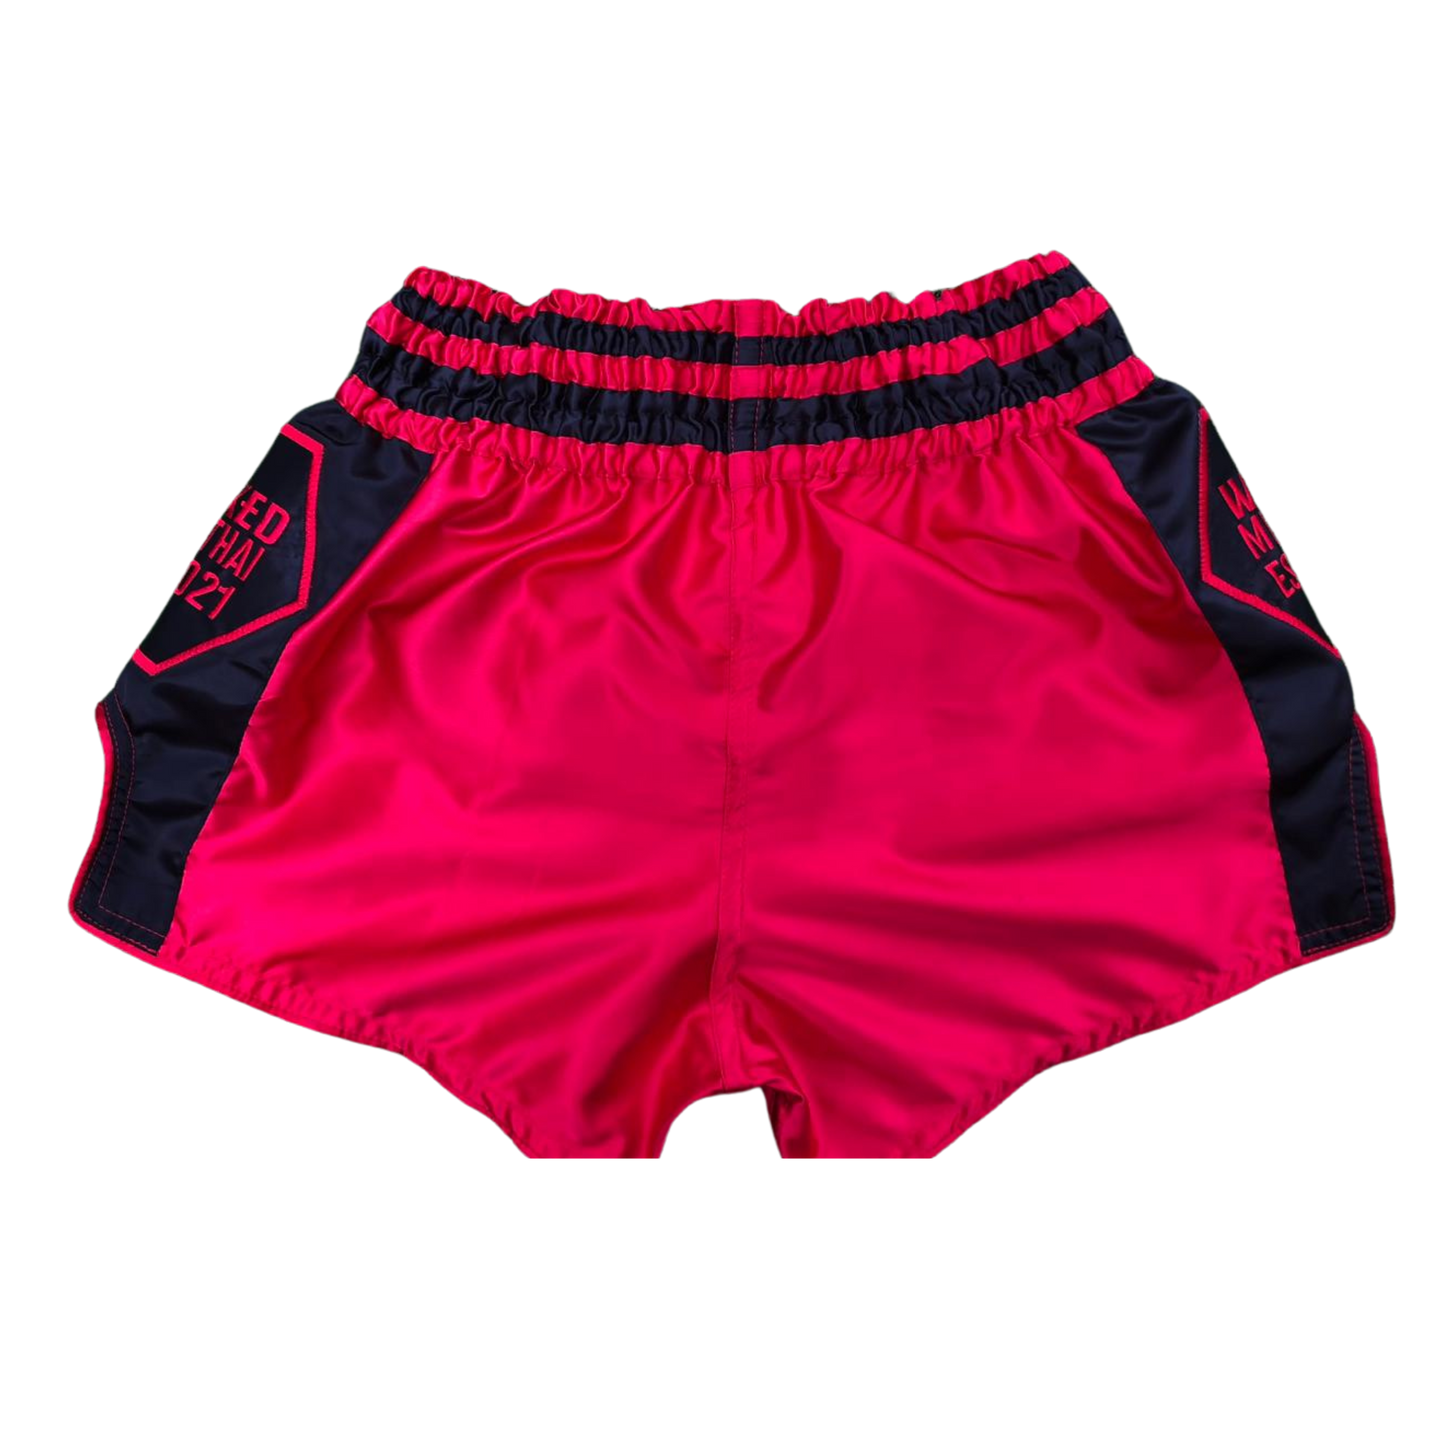 *New* Red & Black Muay Thai Shorts